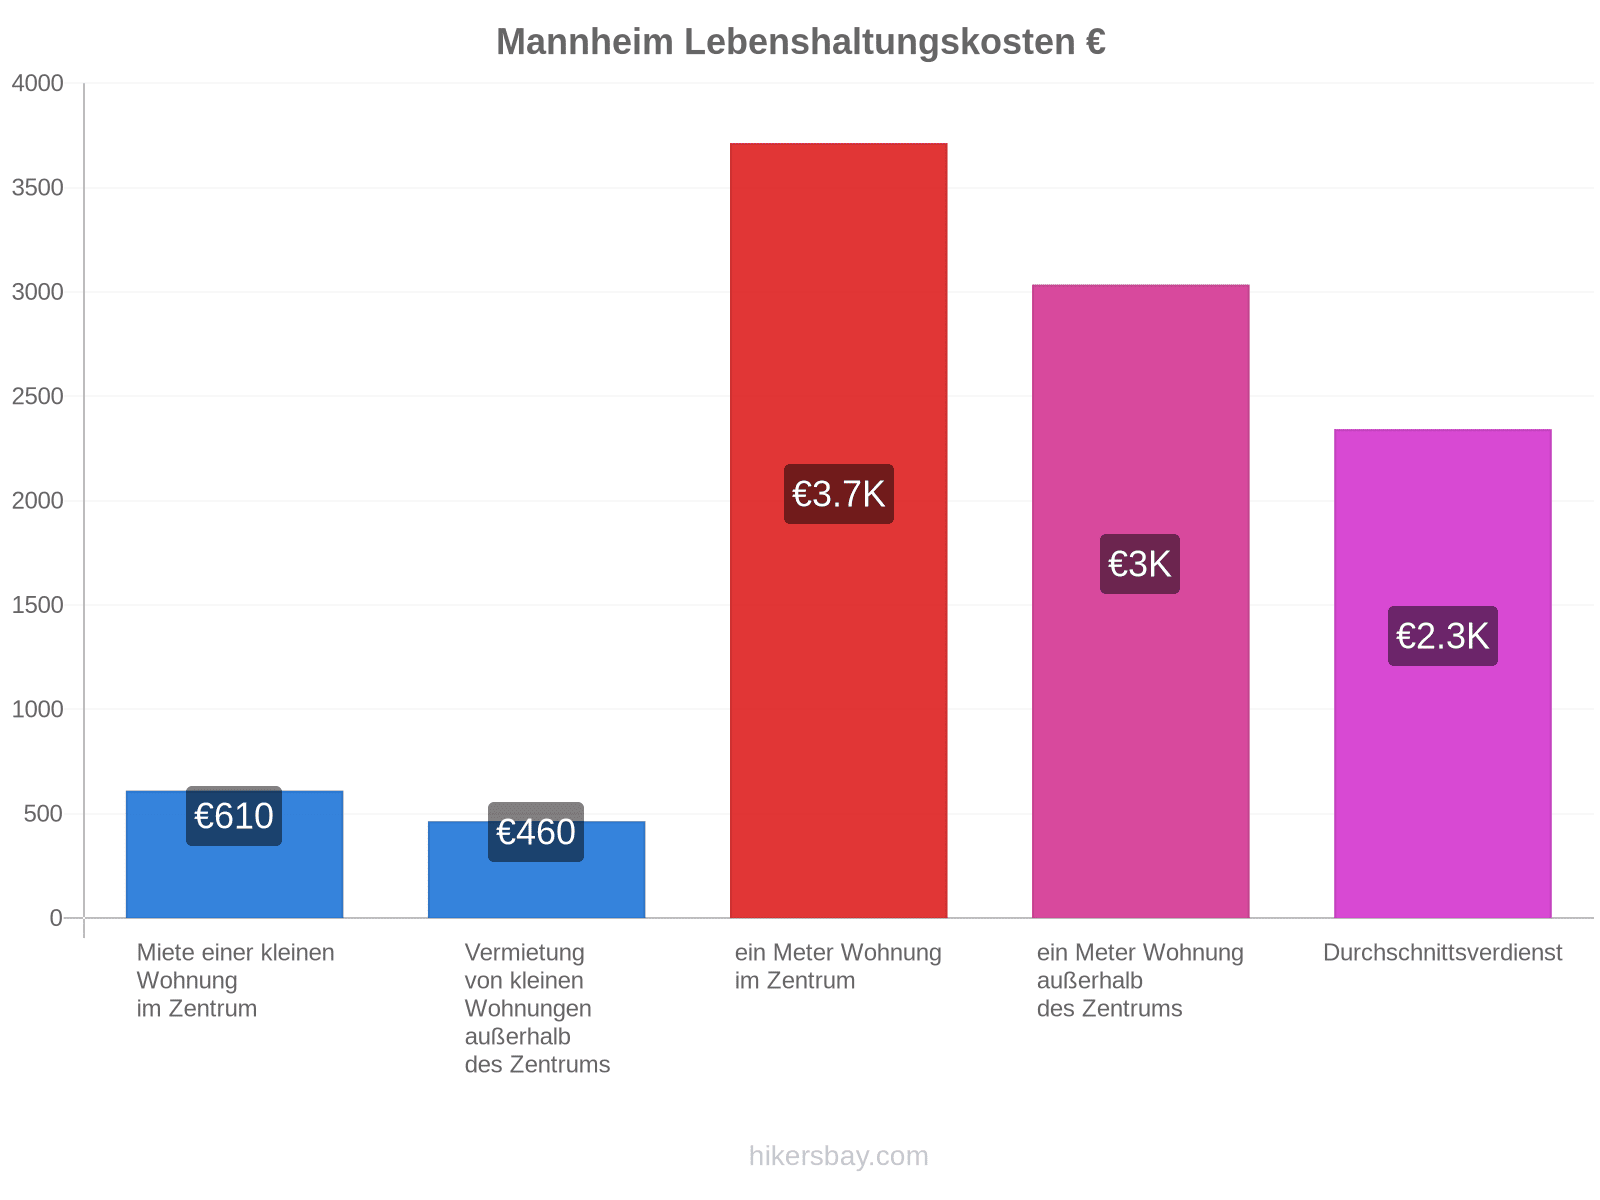 Mannheim Lebenshaltungskosten hikersbay.com